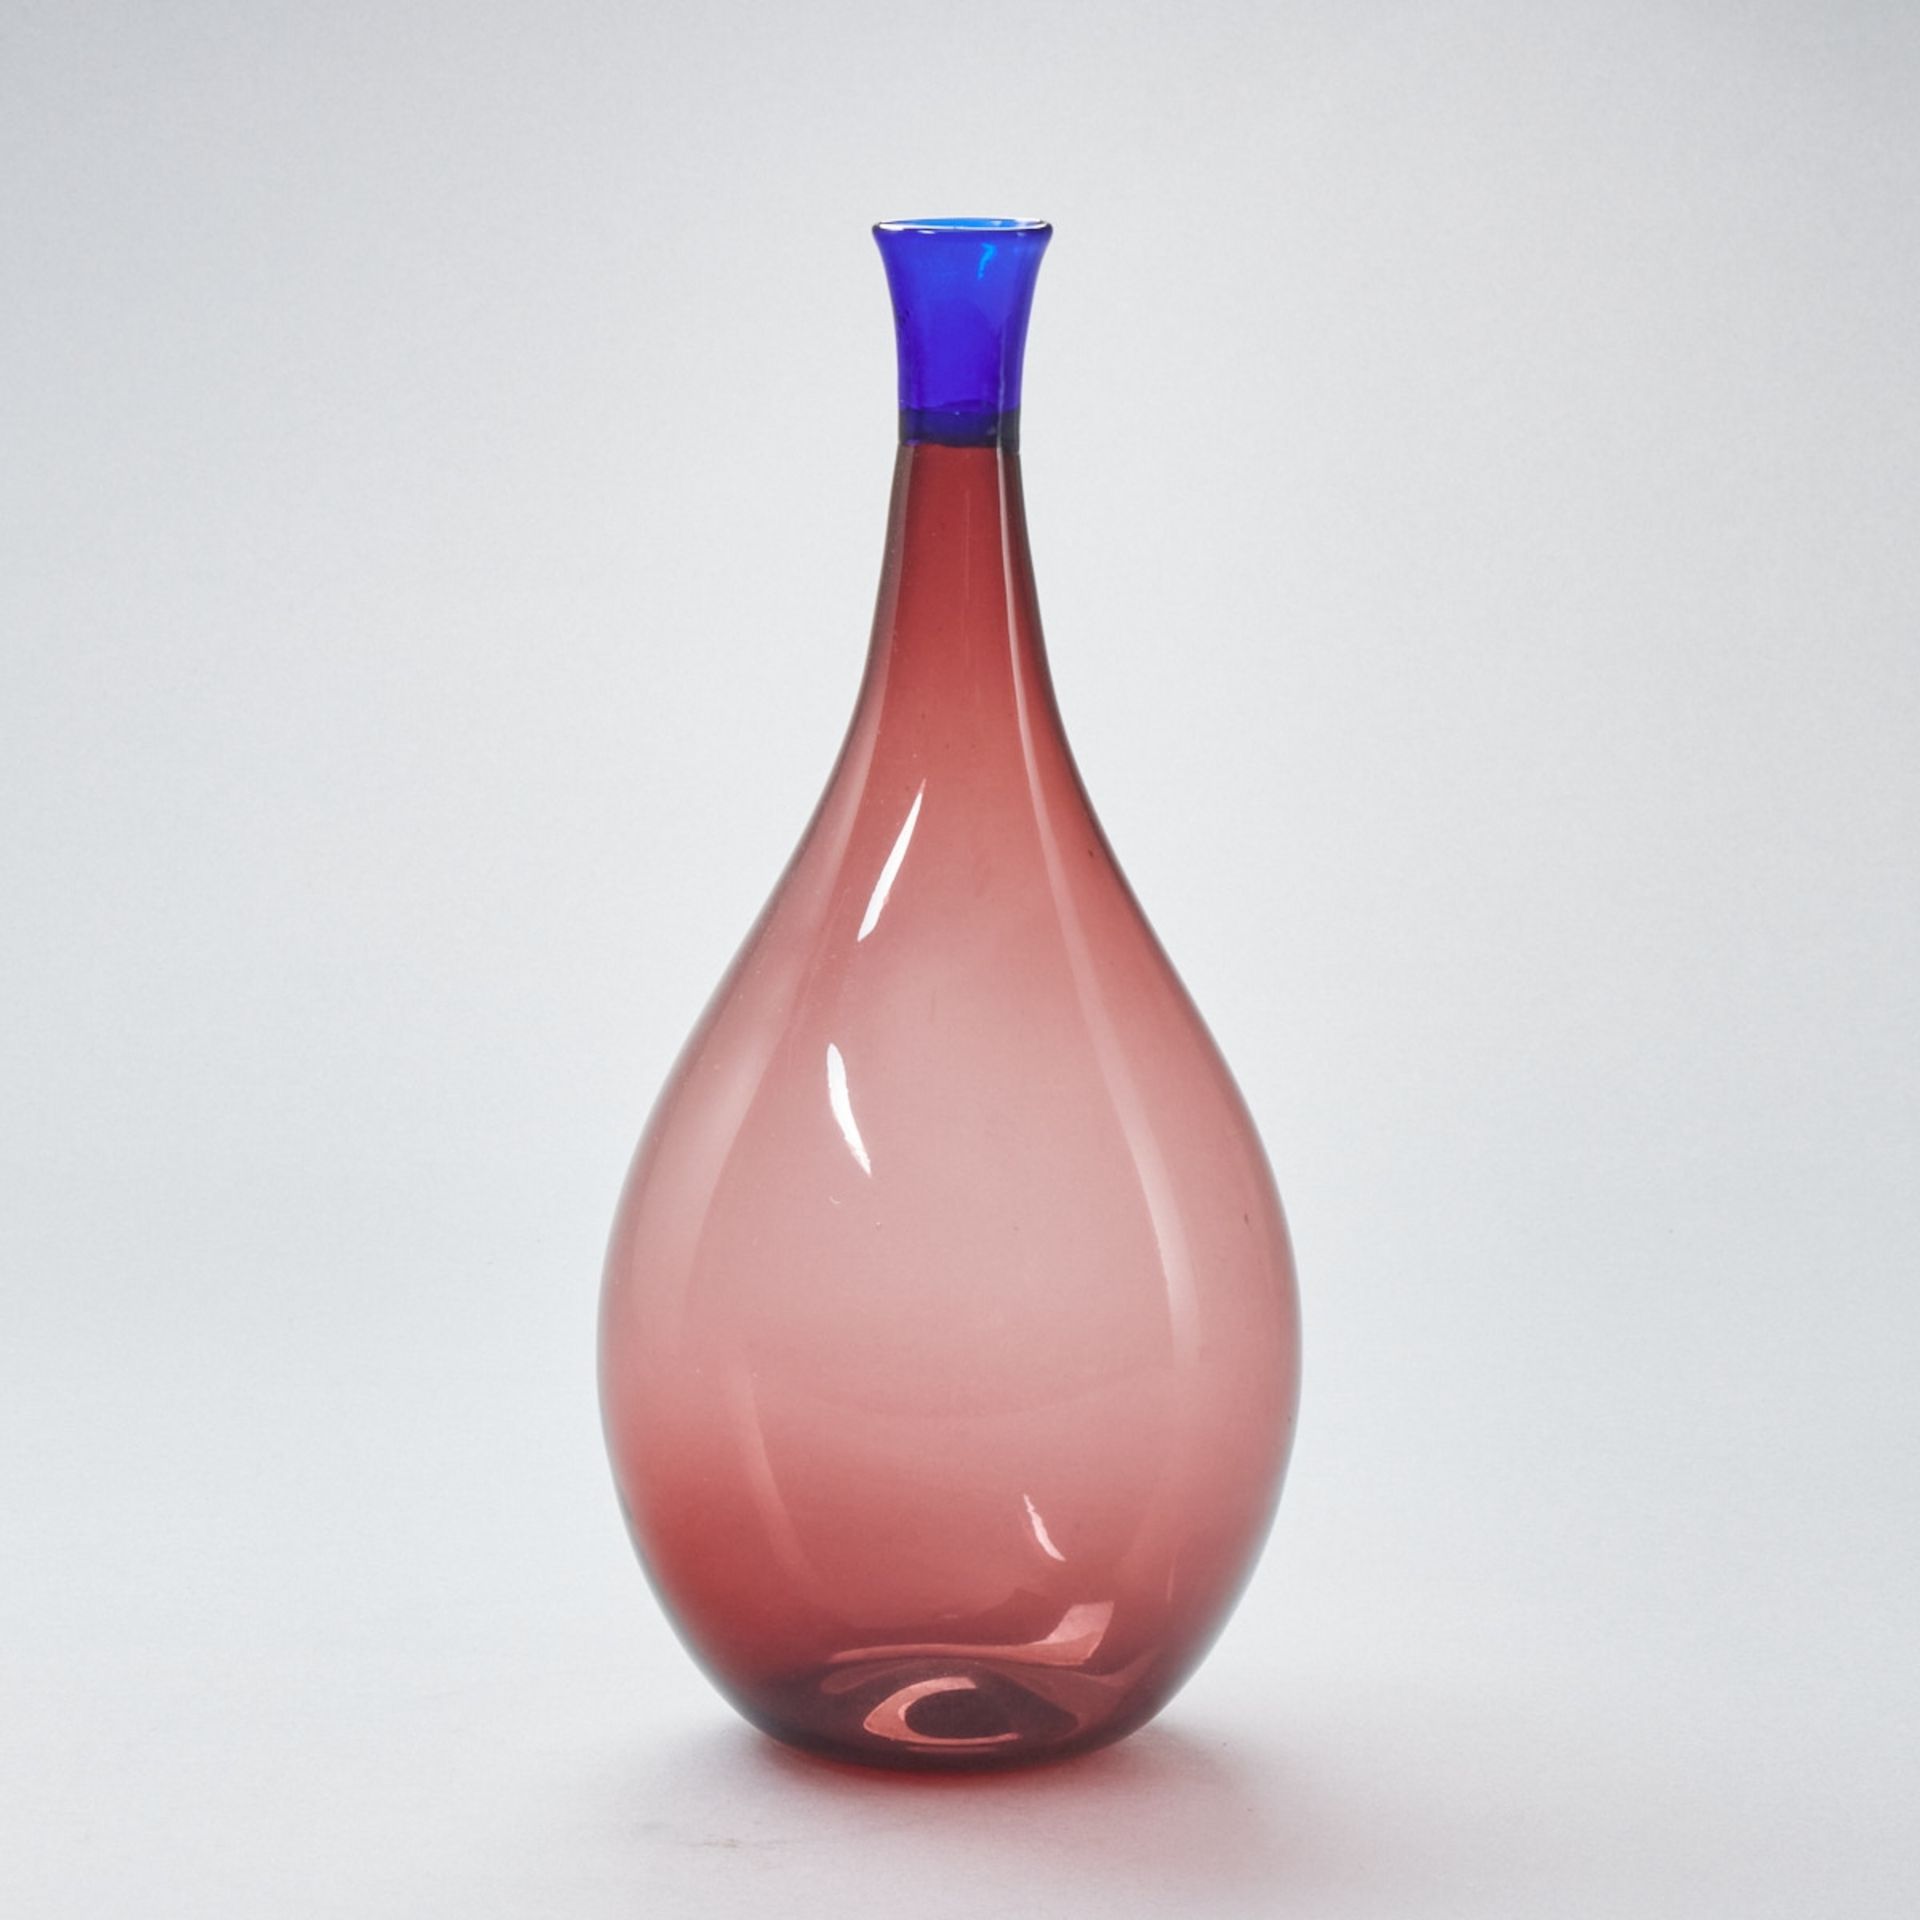 Tropfenförmige Vase 'Colletto' - Ludovico Diaz de Santillana. Venini & C., Murano um 1968.